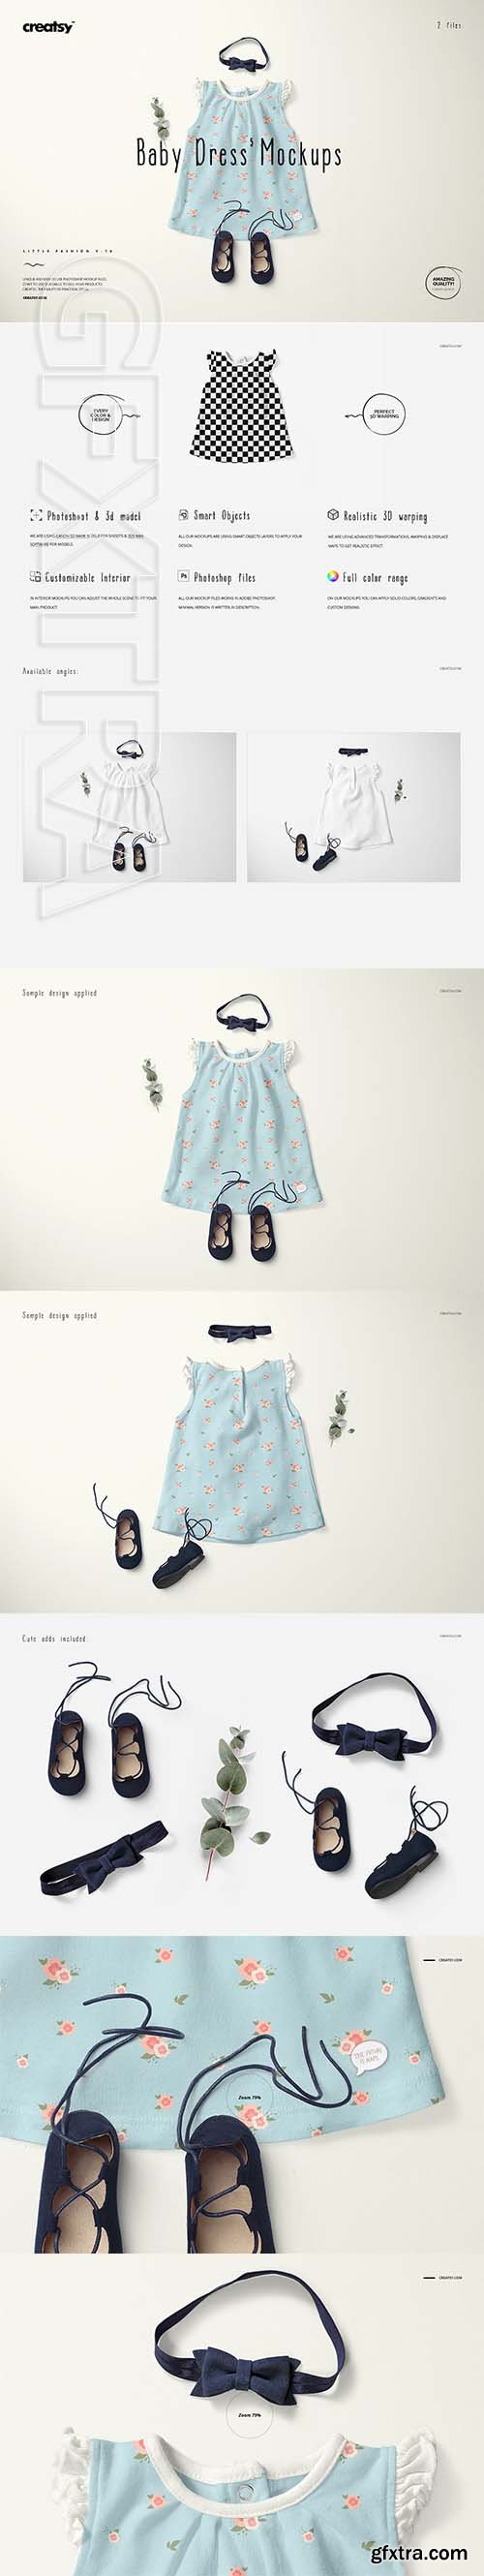 CreativeMarket - Baby Dress Mockup Set 5 2534318